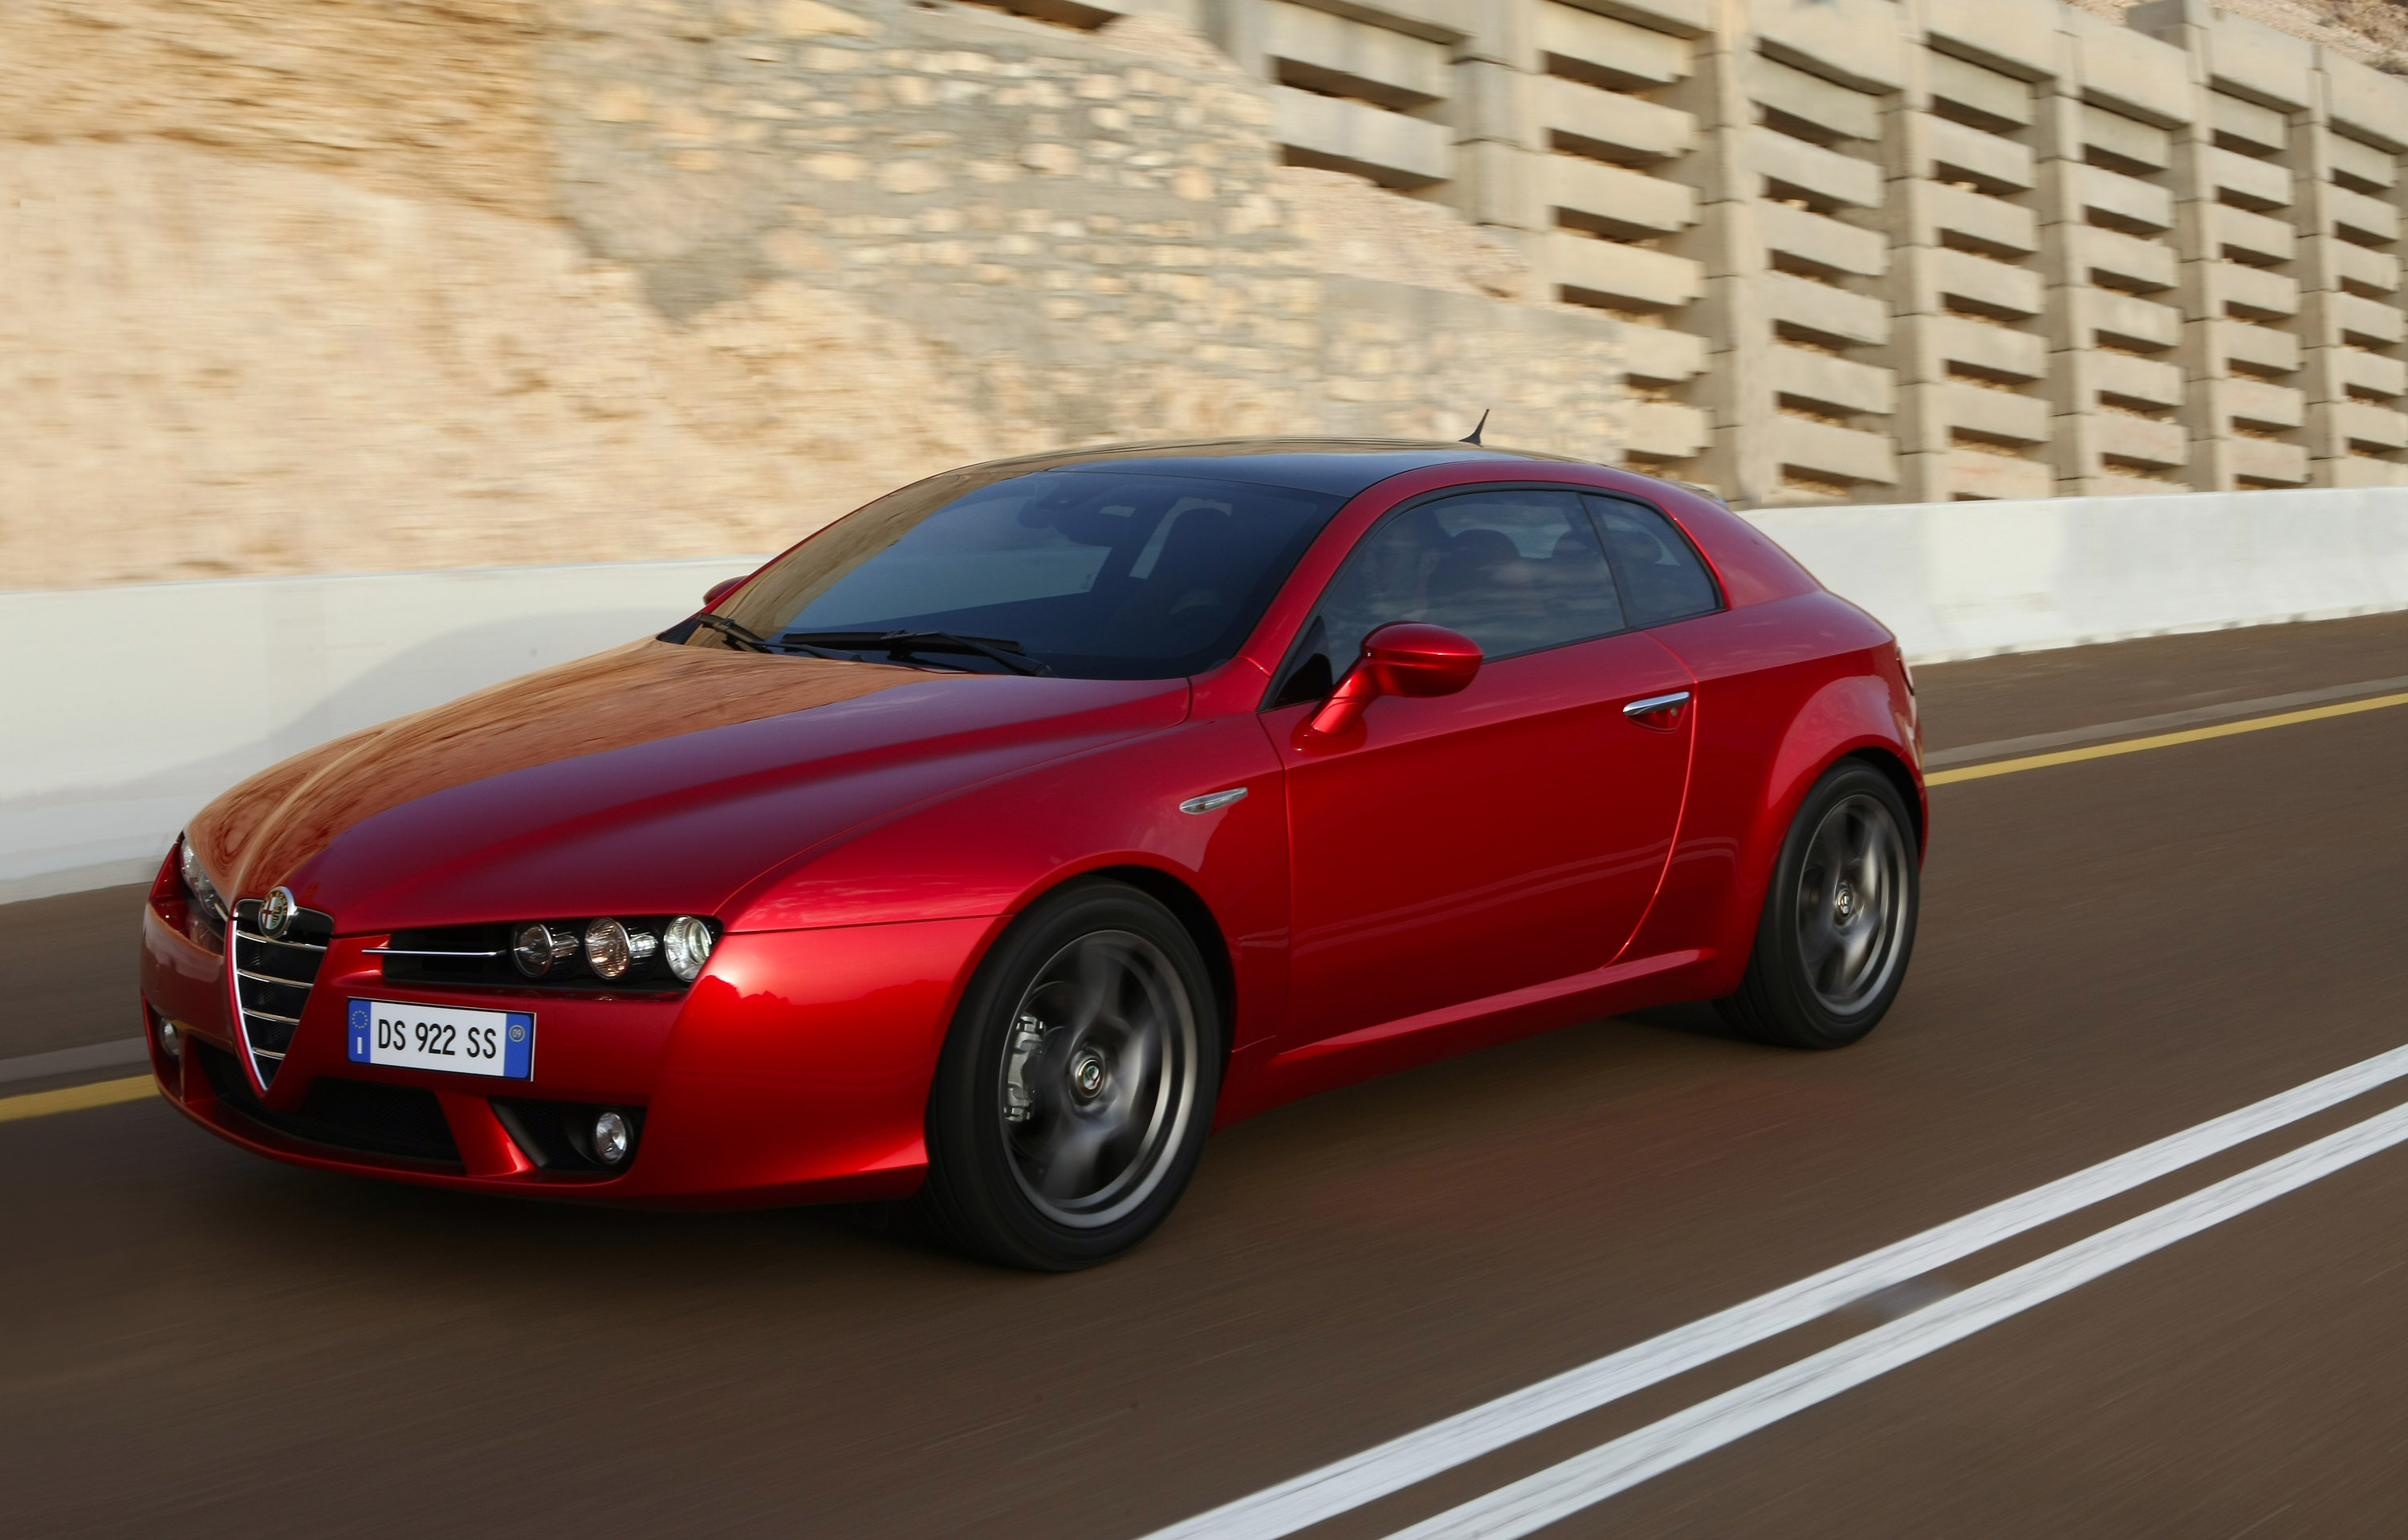 Alfa Romeo Brera HD wallpapers, Desktop wallpaper - most viewed